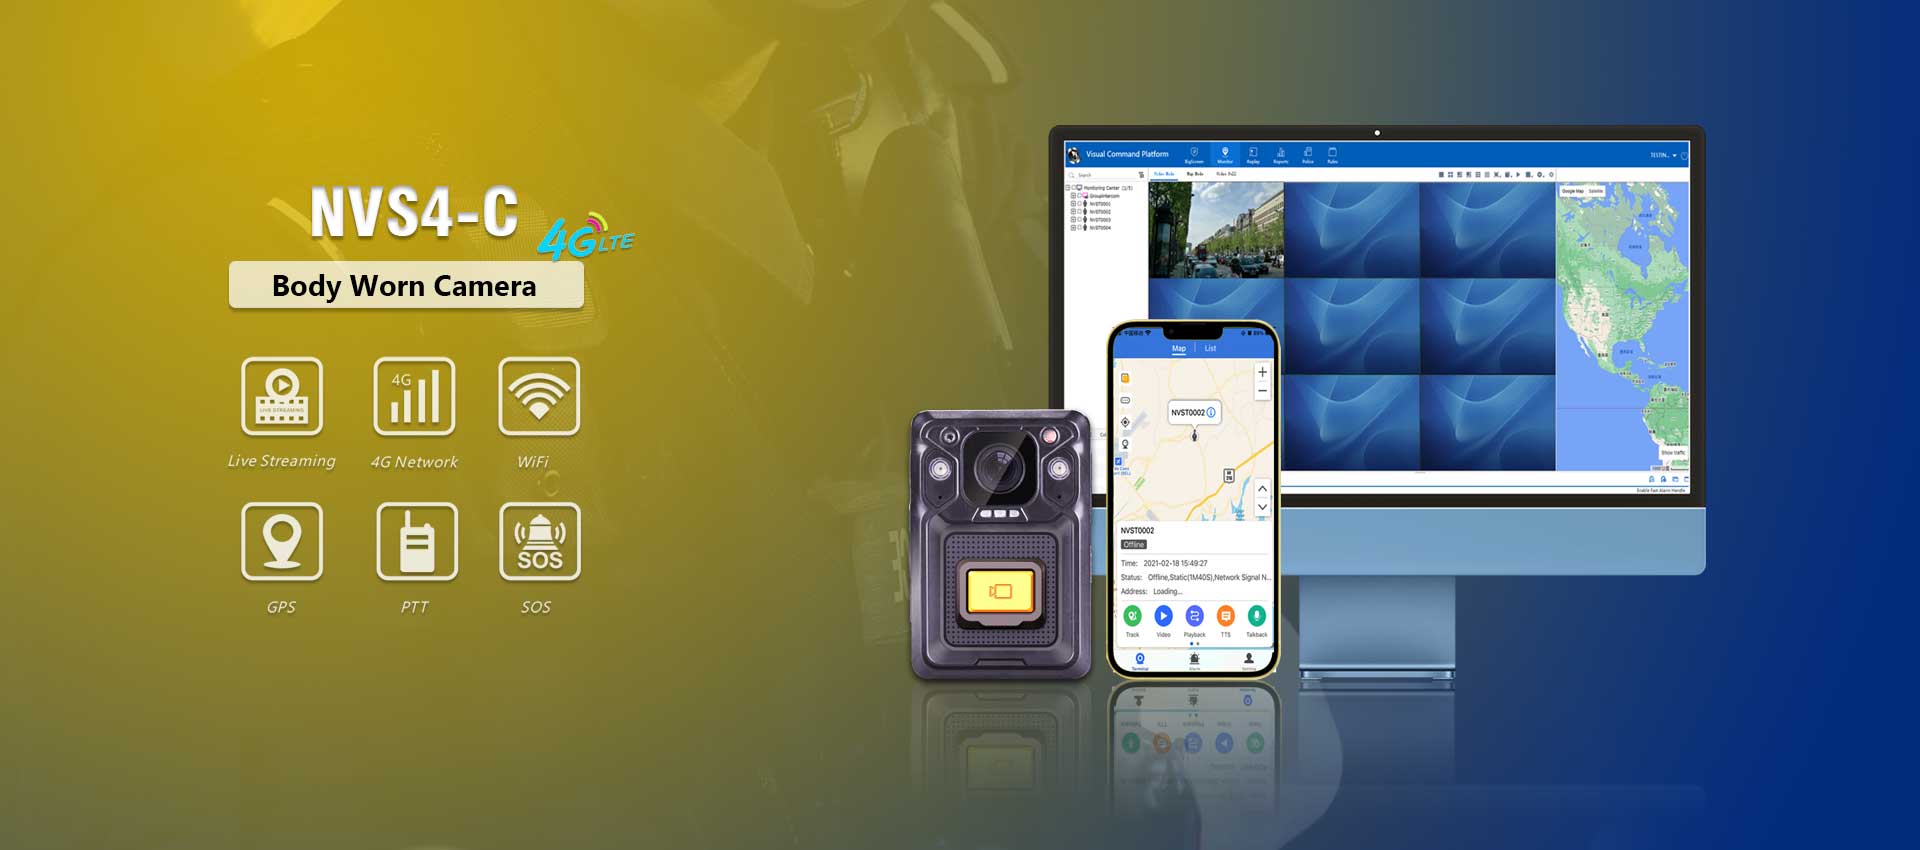 NVS4-C-4G-라이브 스트리밍-신체 착용 카메라-경찰(SOS GPS WIFI 포함)